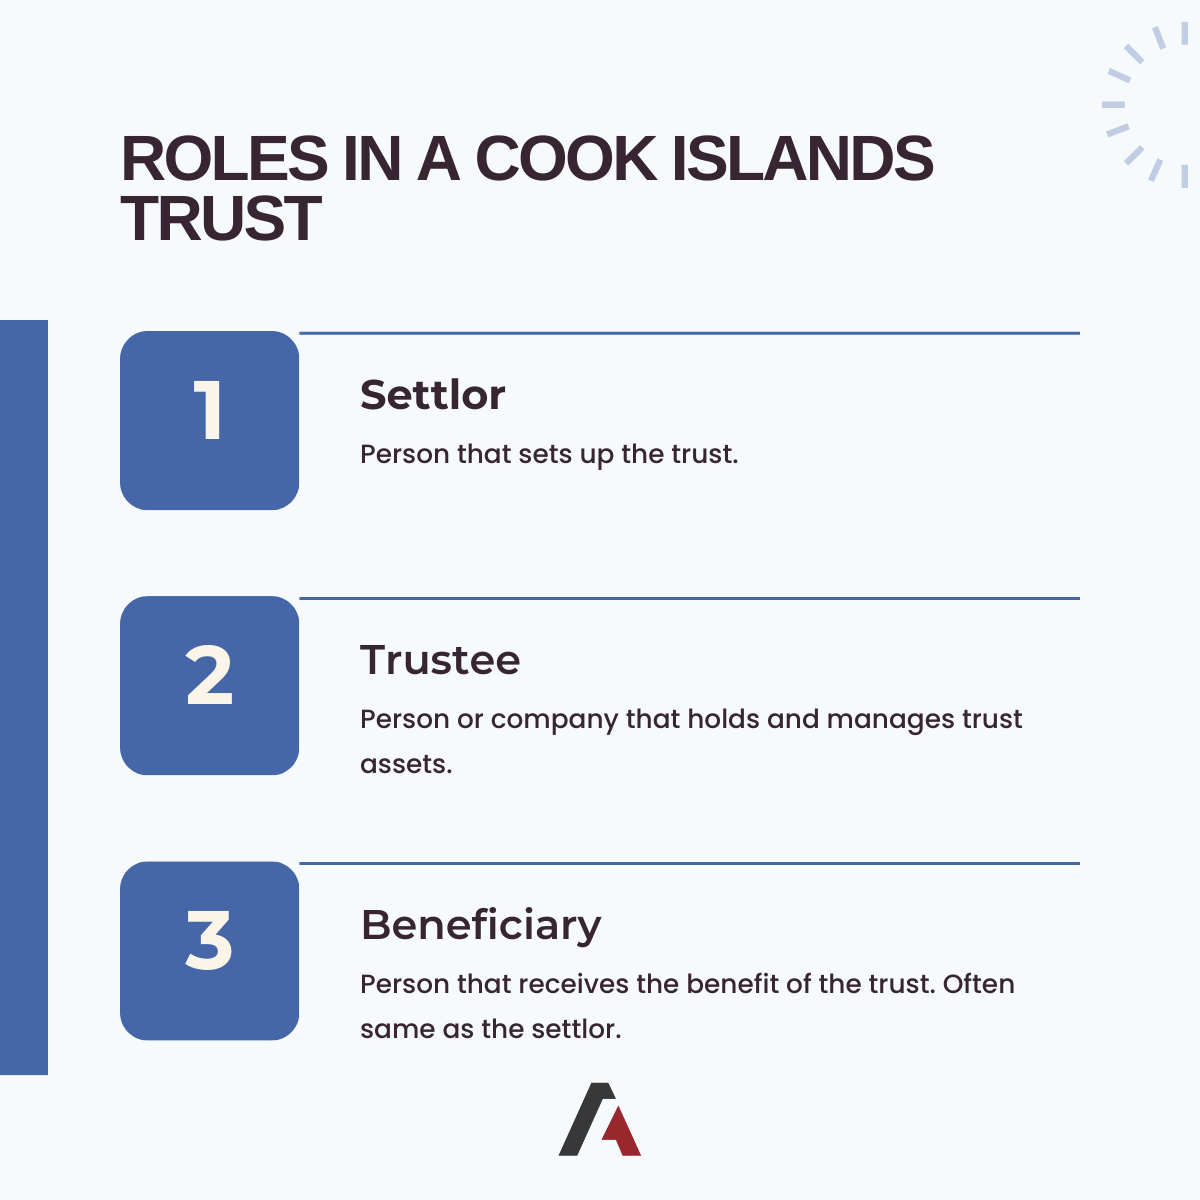 Roles in a Cook Islands Trust